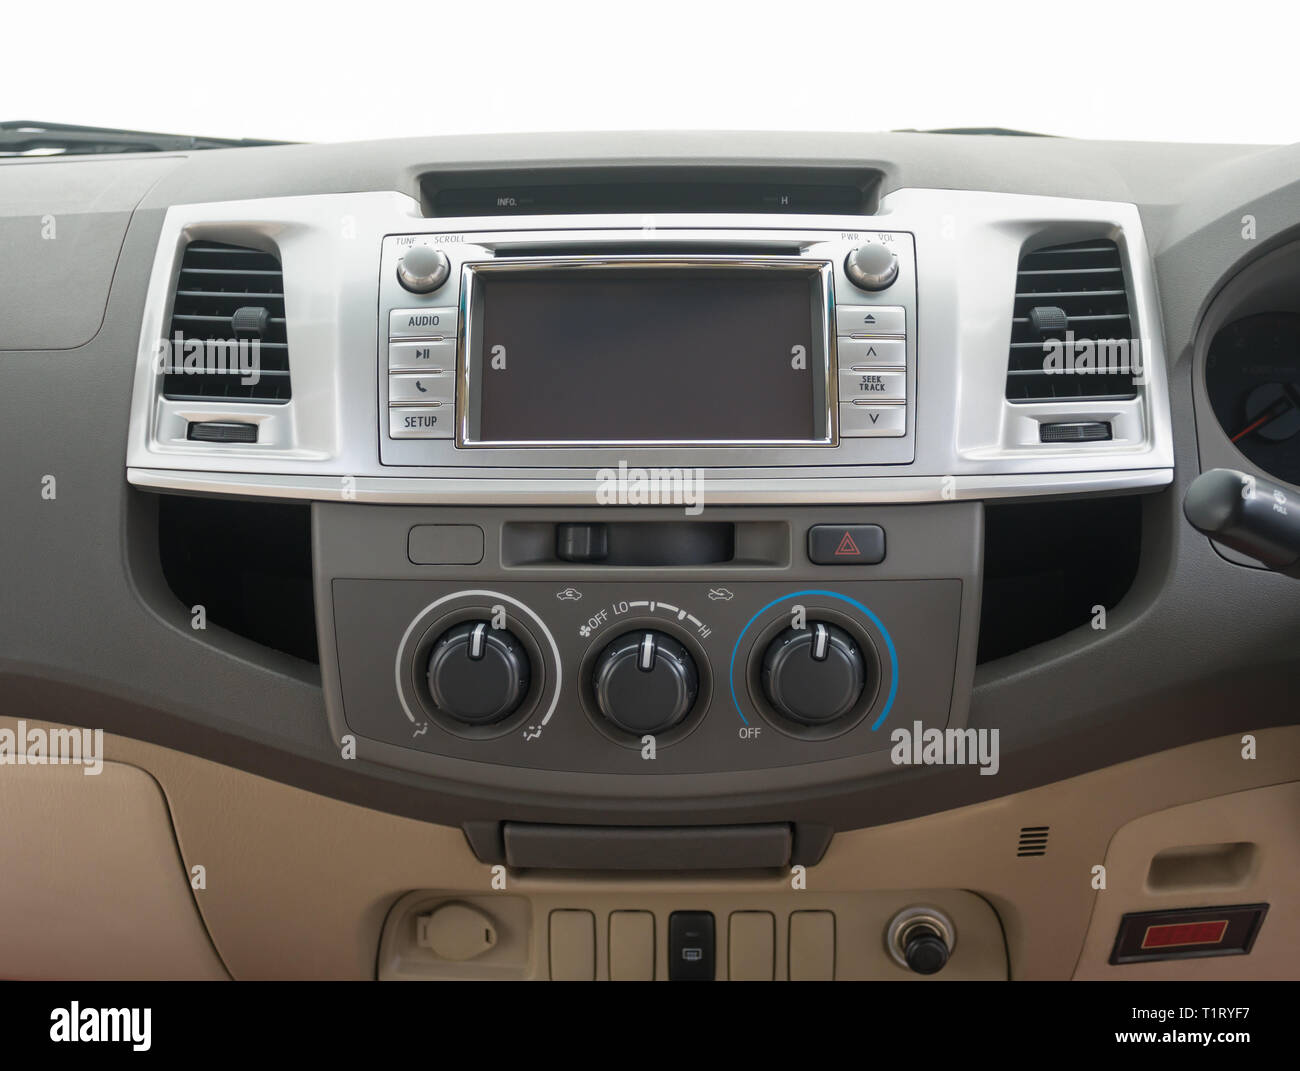 Toyota Vigo Champ3000 Turbo Innenraum Konsole öffnen Vent gehören Touch Screen Monitor Klimaanlage Zigarettenanzünder im Auto Stereo. Toyota Vigo Champ Stockfoto